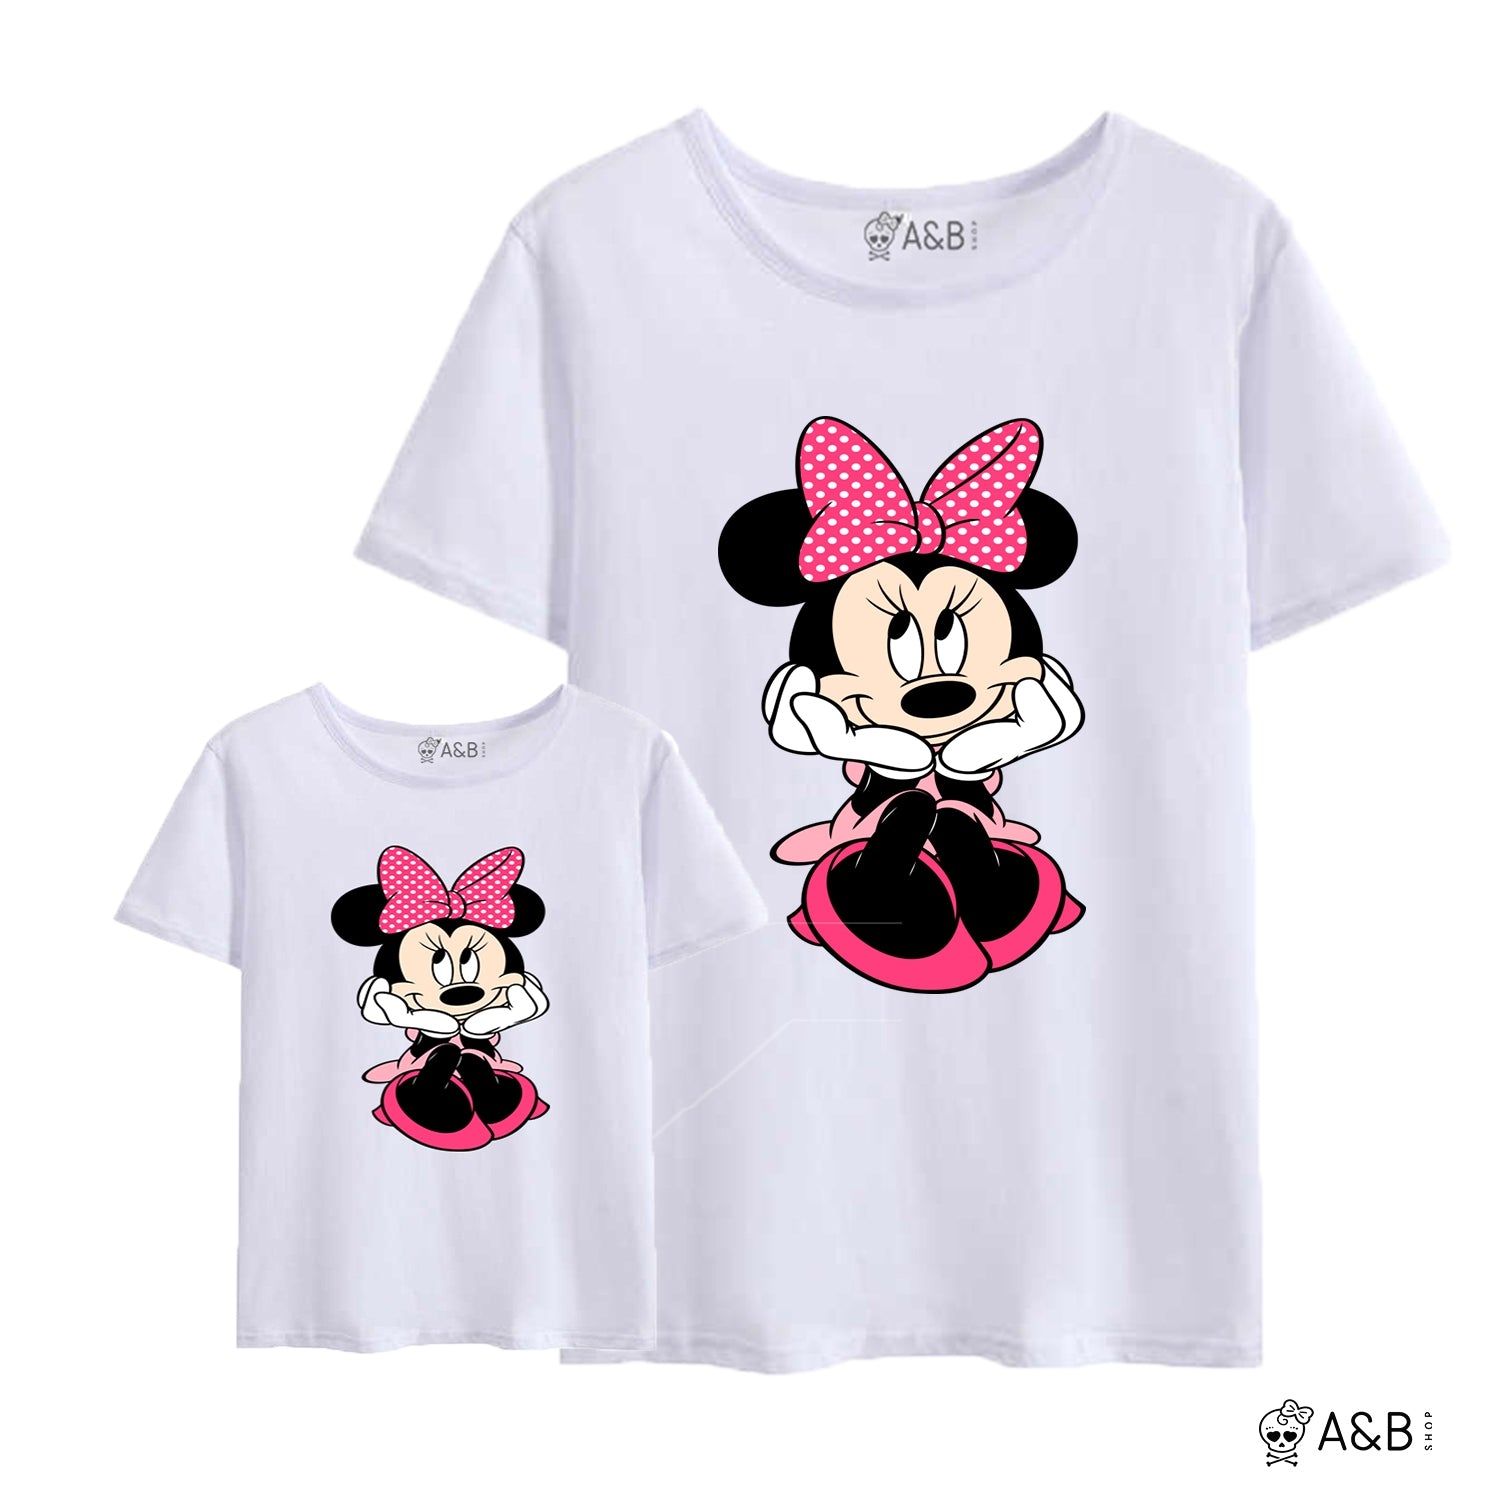 Norma Prevalecer Papúa Nueva Guinea Camiseta Disney Minnie Mouse Lazo rosa, un regalo original